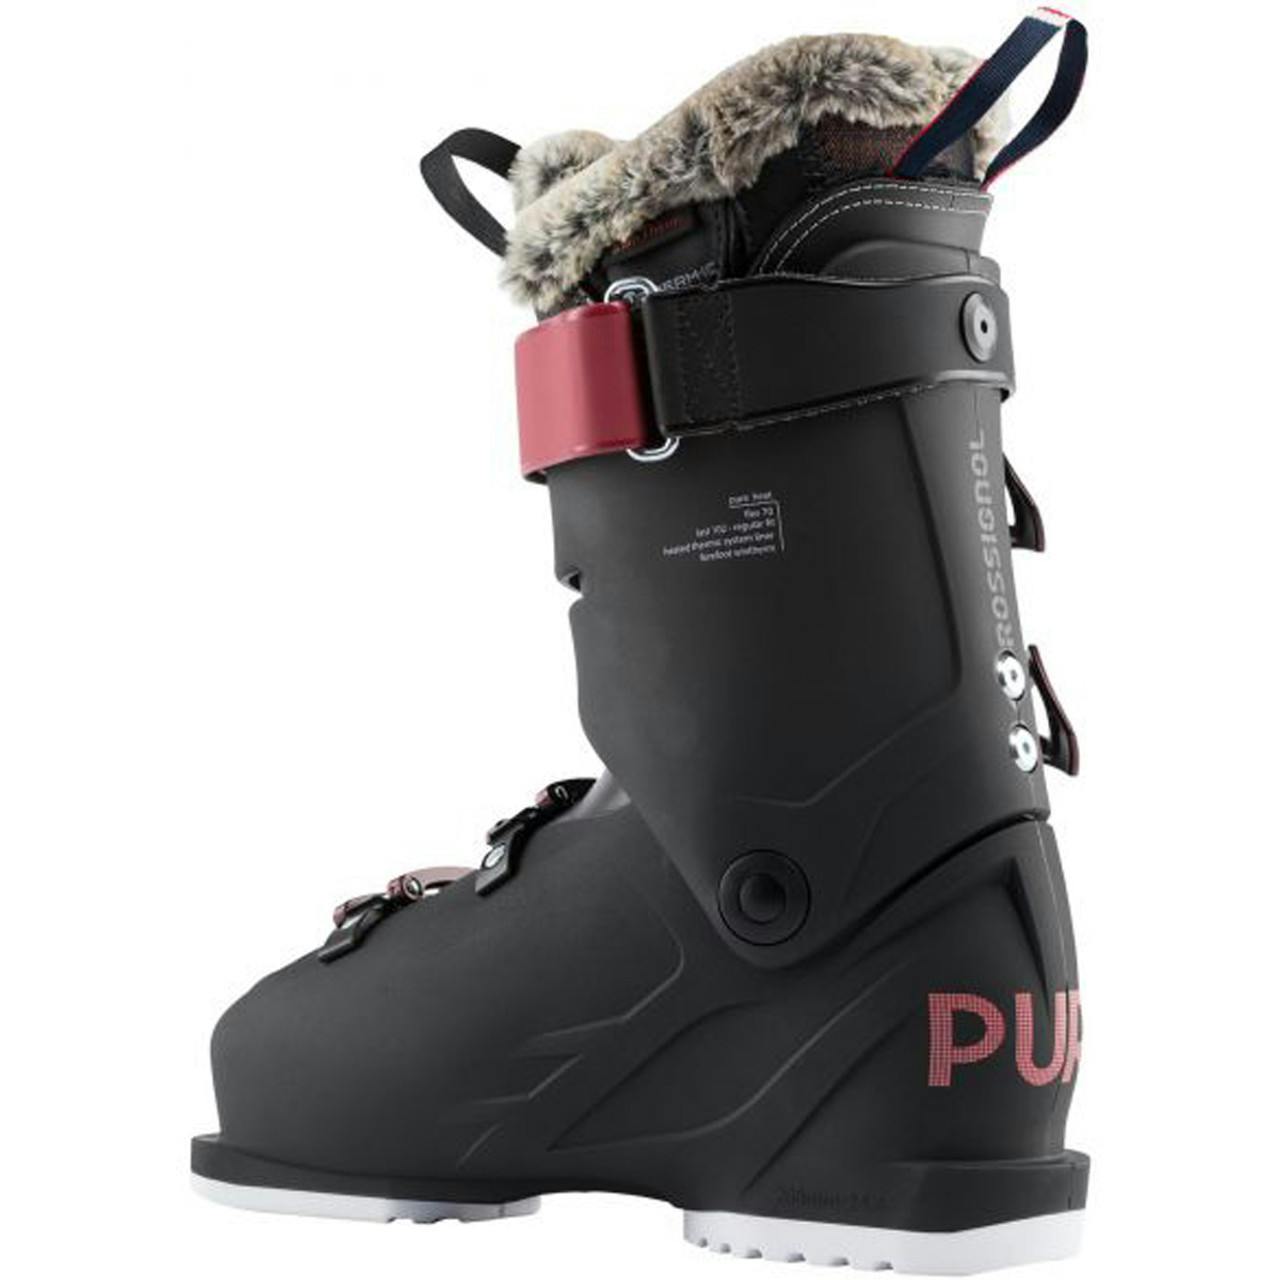 Rossignol Pure Heat Ski Boots · Women's · 2021